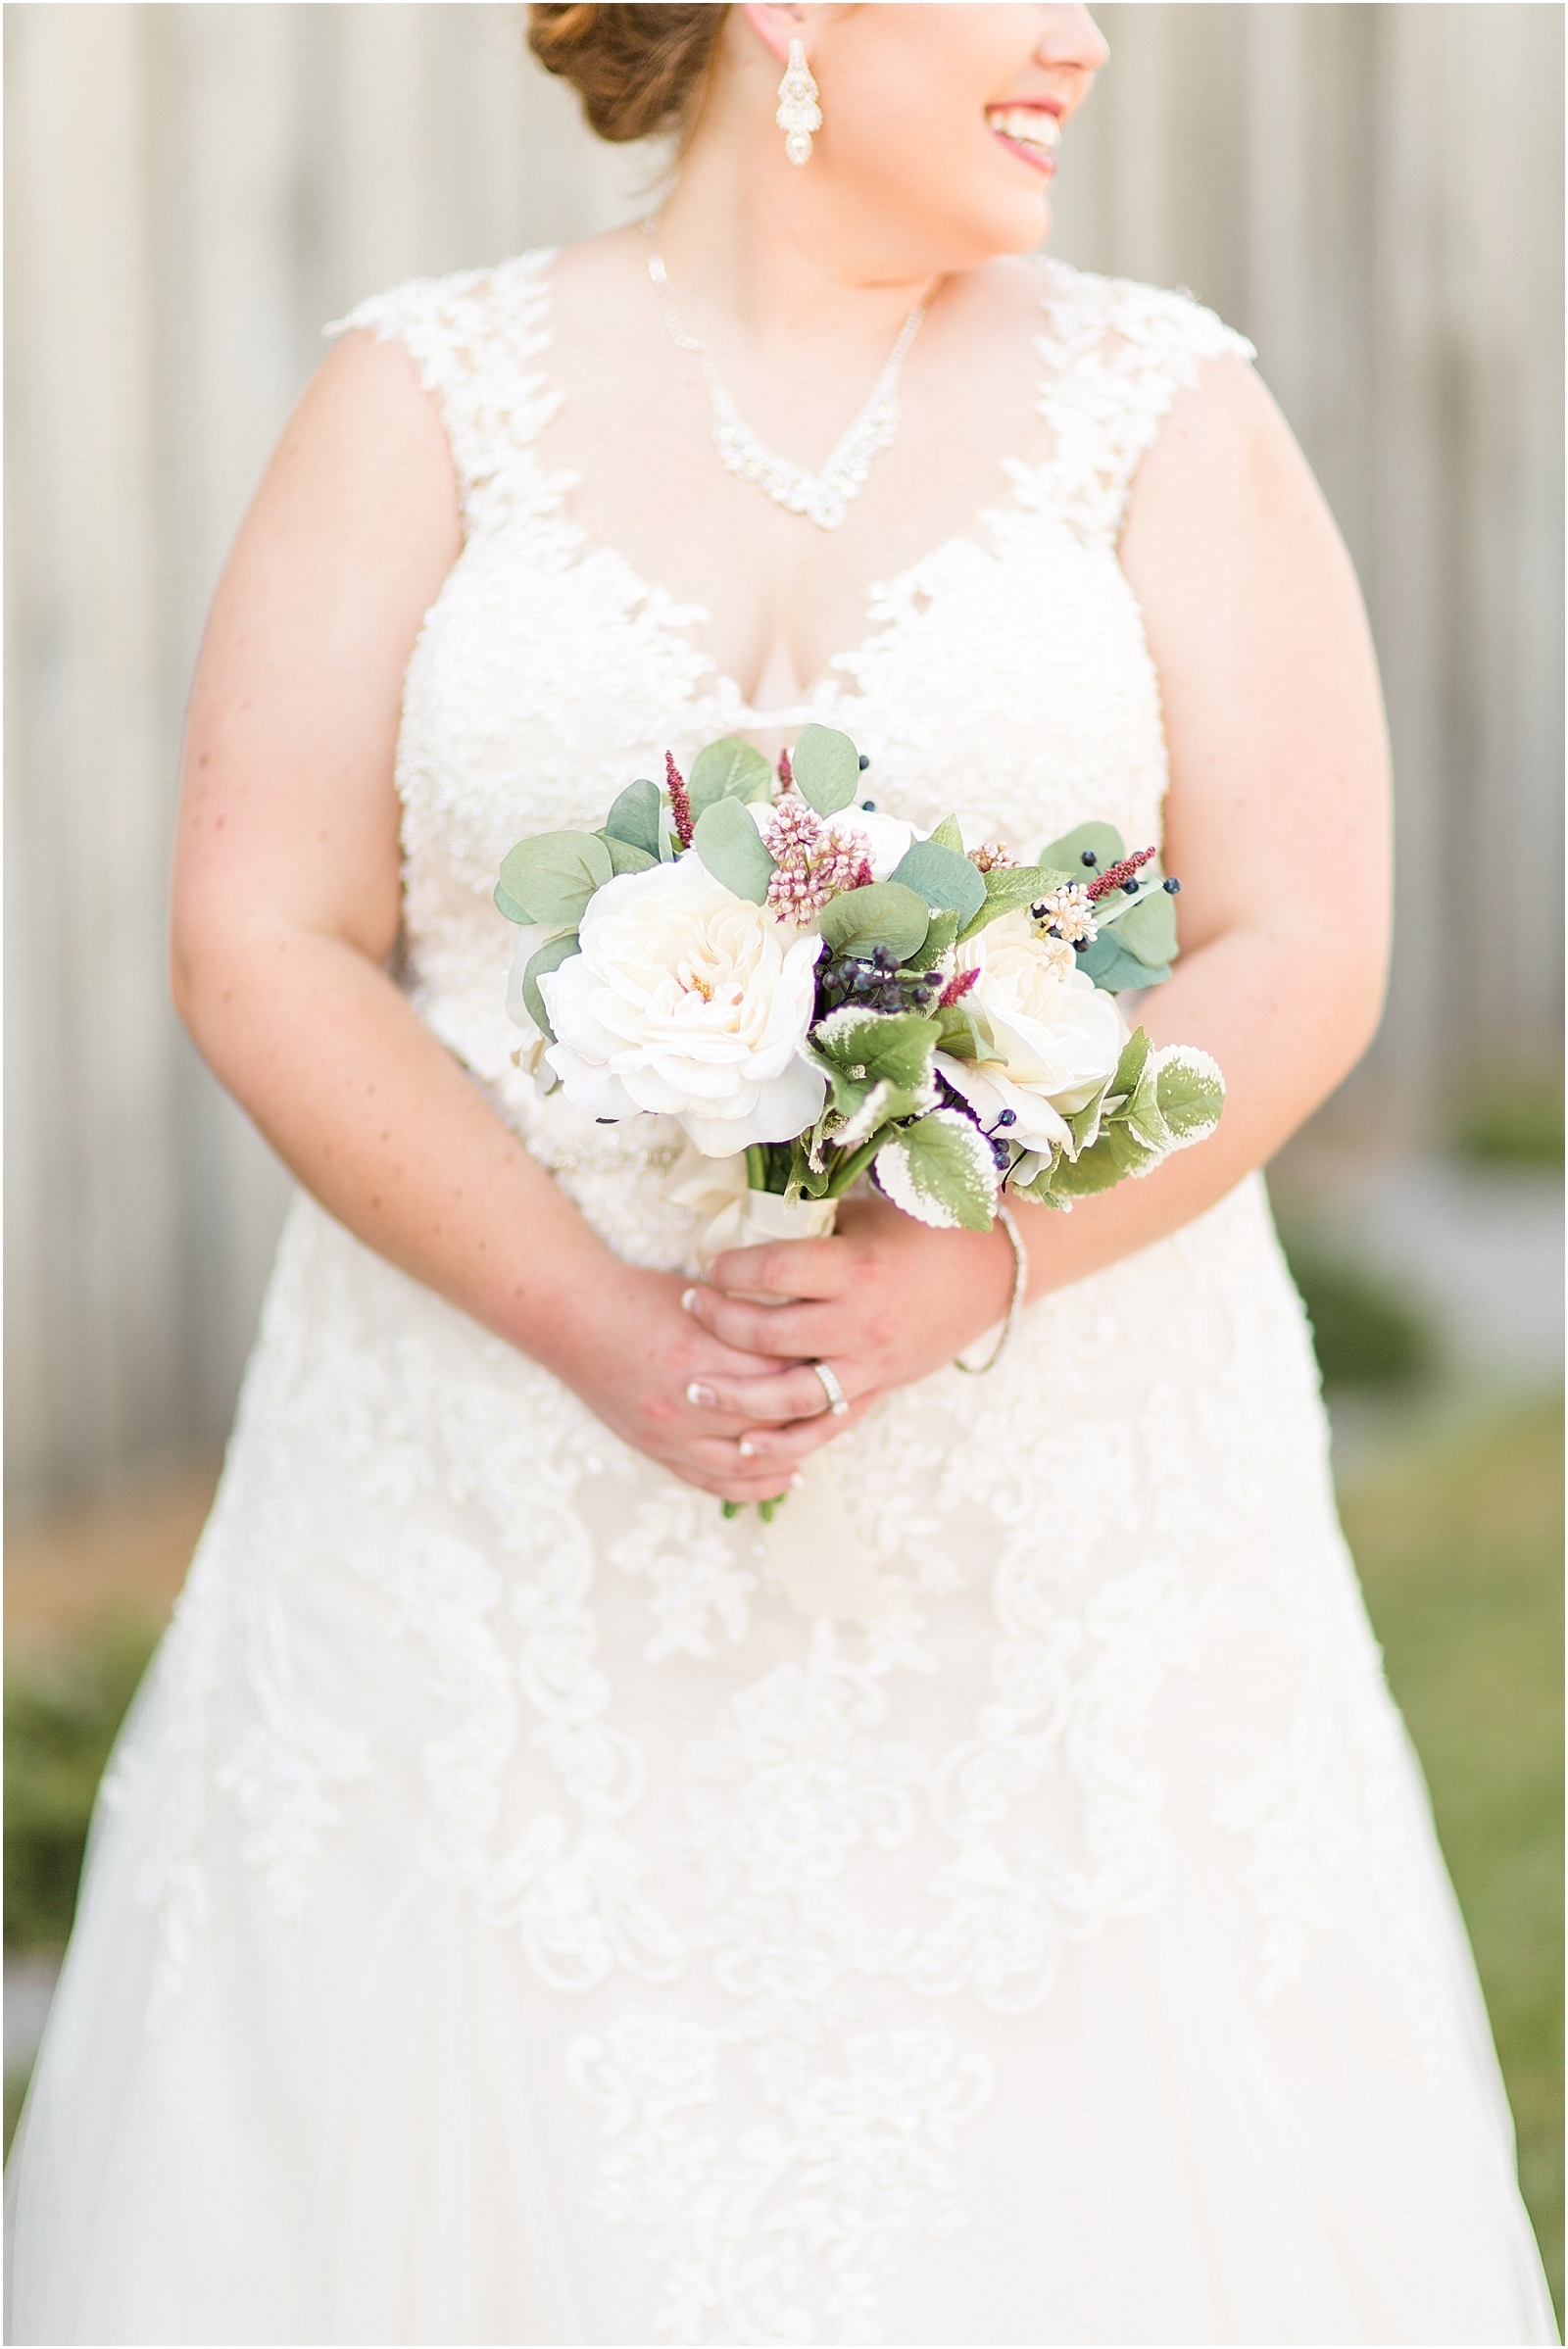 Rachel and Michael | Bret and Brandie Photography | Evansville Wedding Photographers 0022.jpg